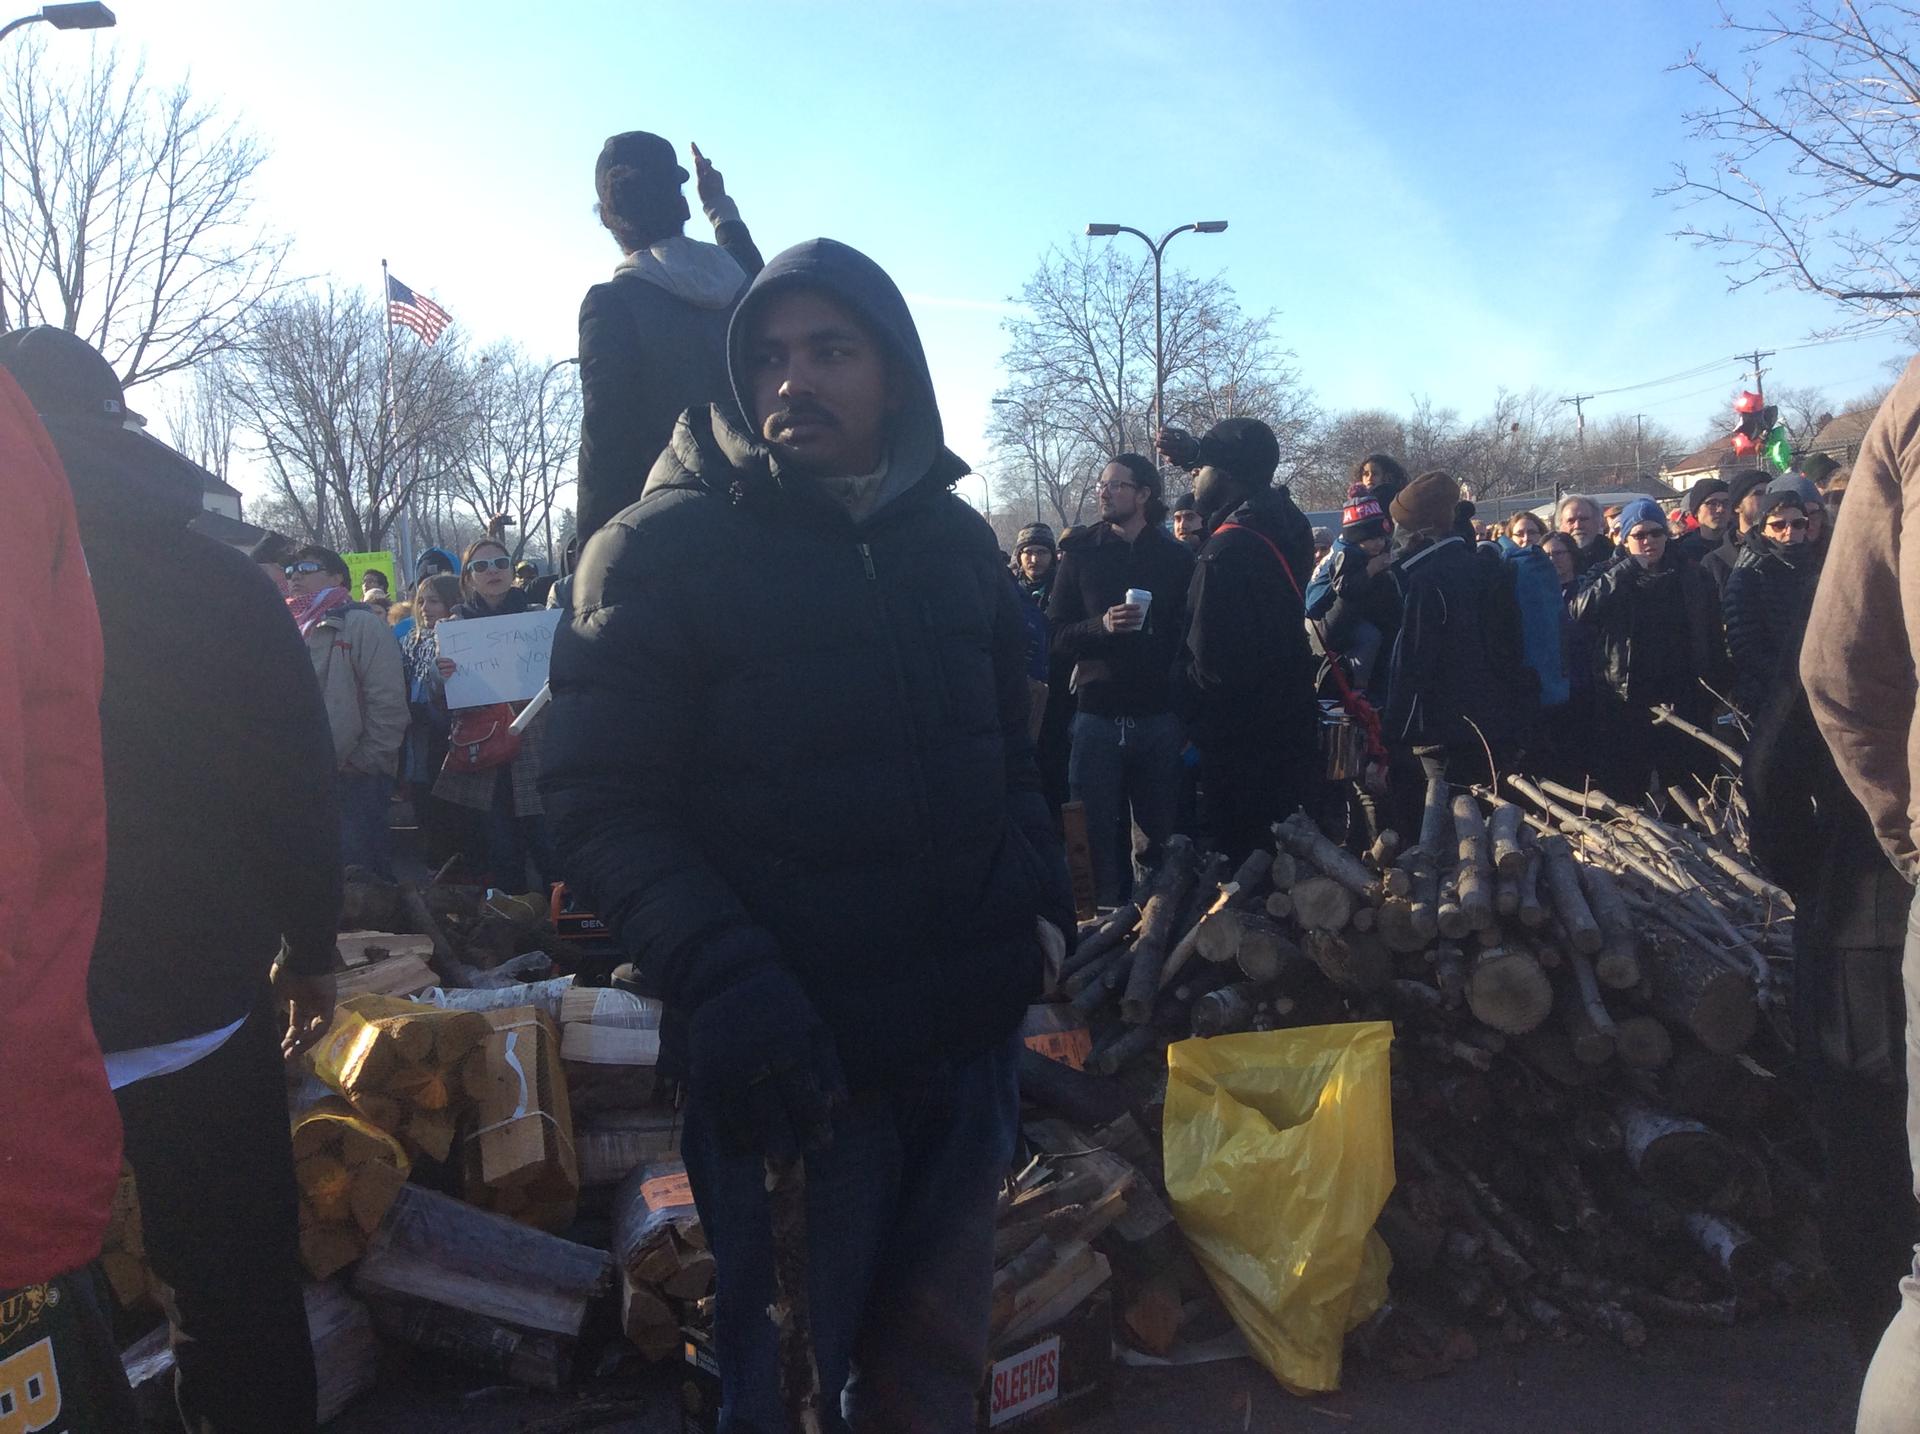 Jayson Morris stacks firewood for protestors